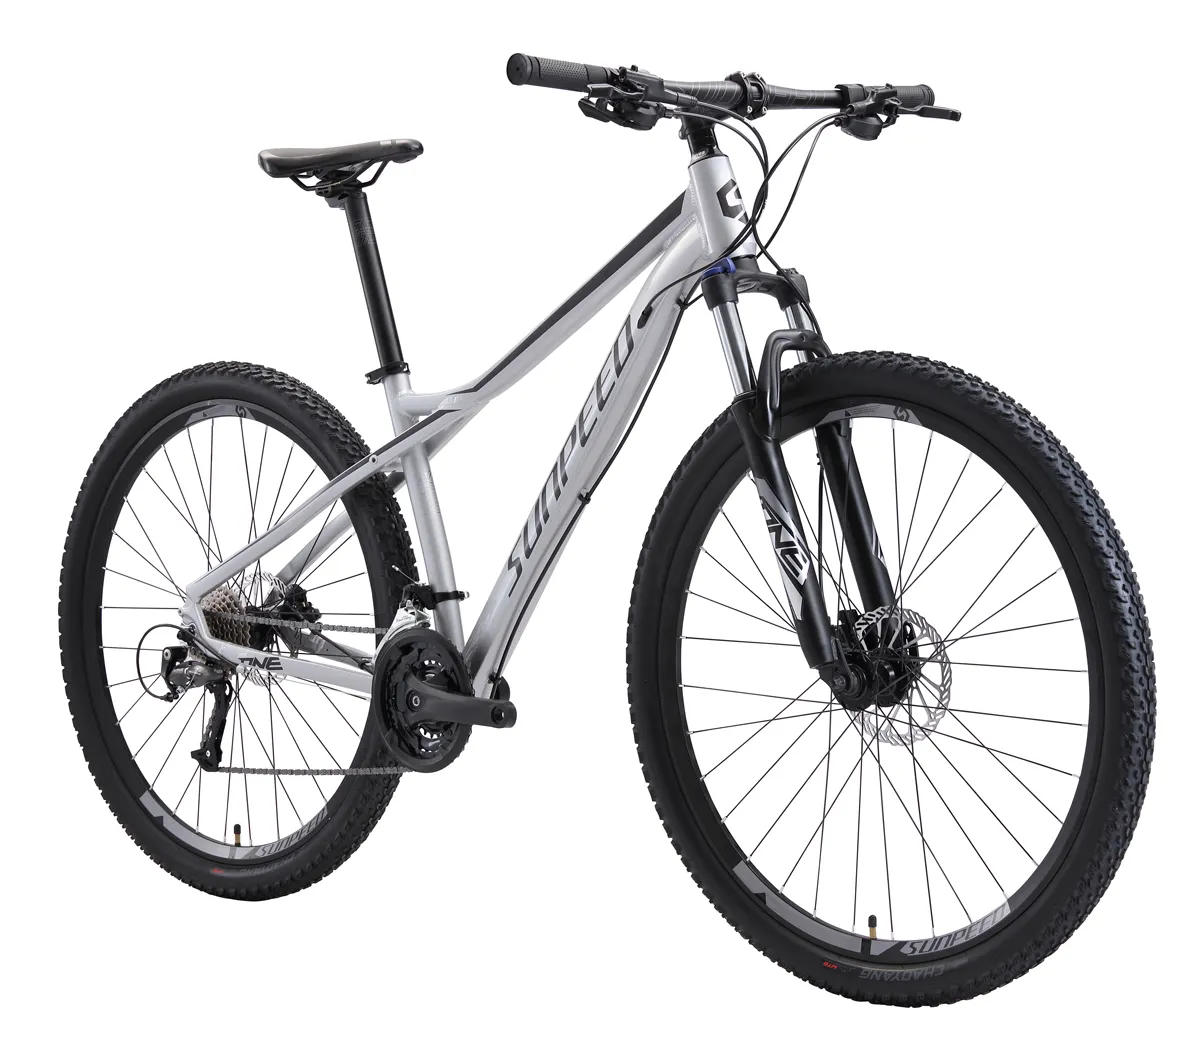 New MTB bike aluminium 27.5/29 bicycle 27 speed Sport mountain bike for sale